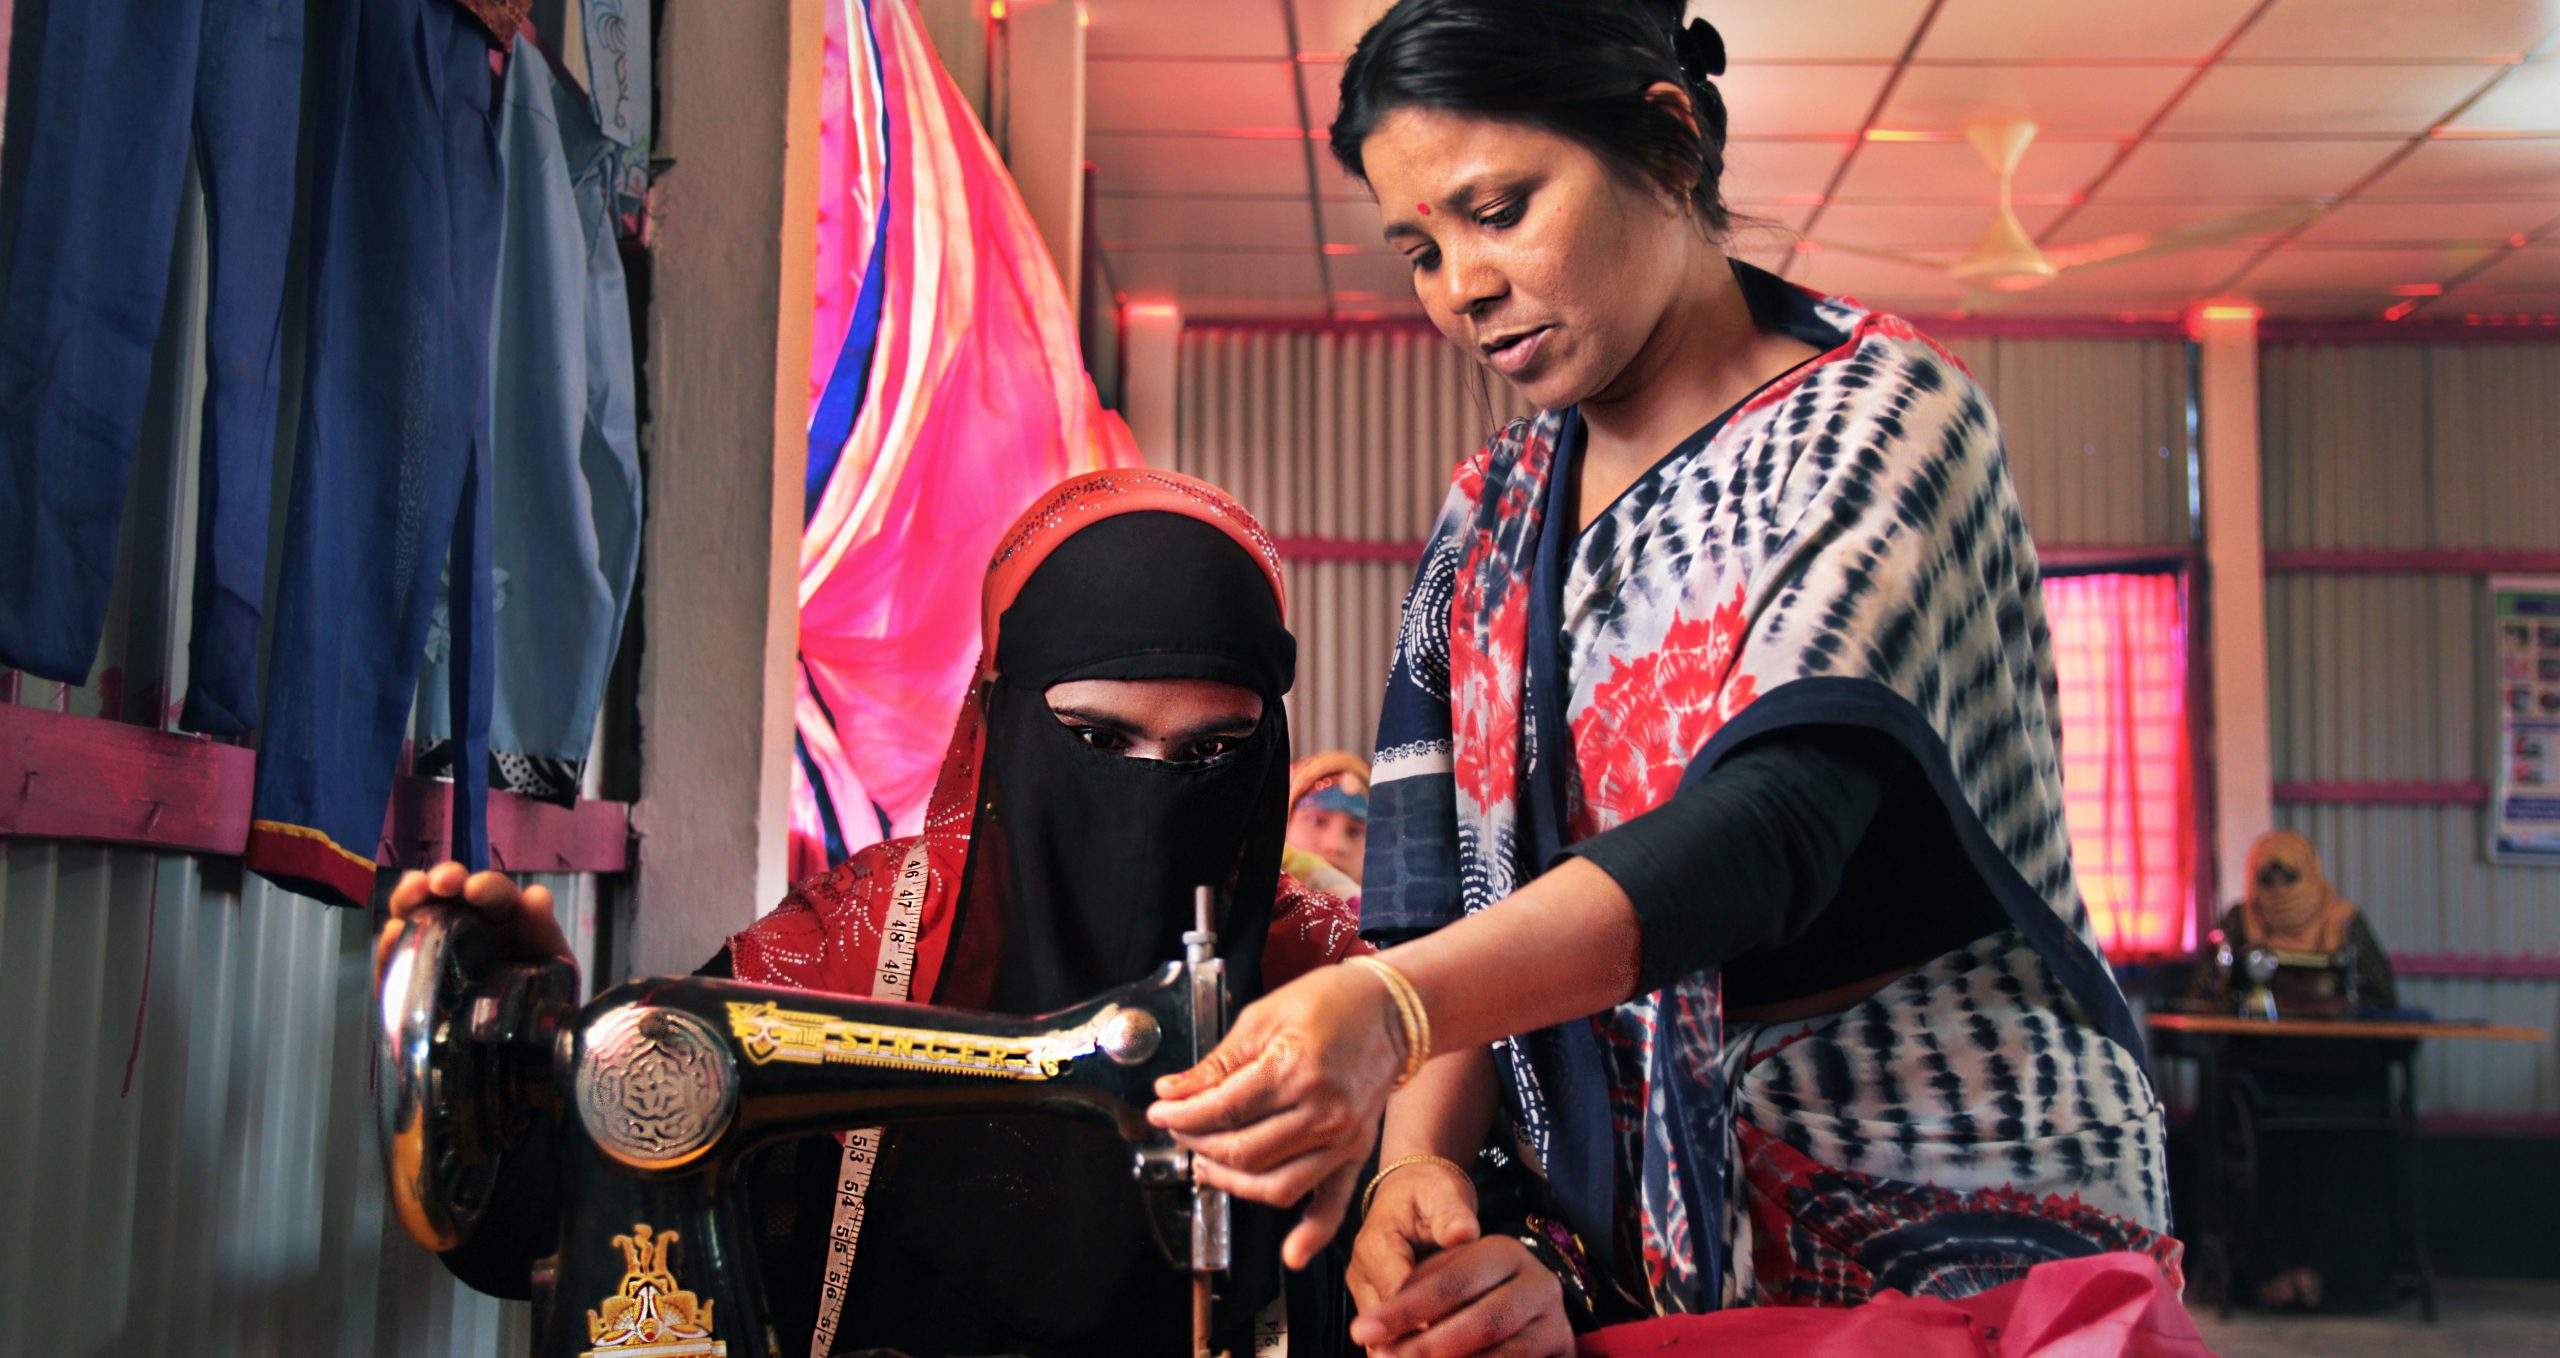 Women at an artisan training center in Cox's Bazar, Bangladesh